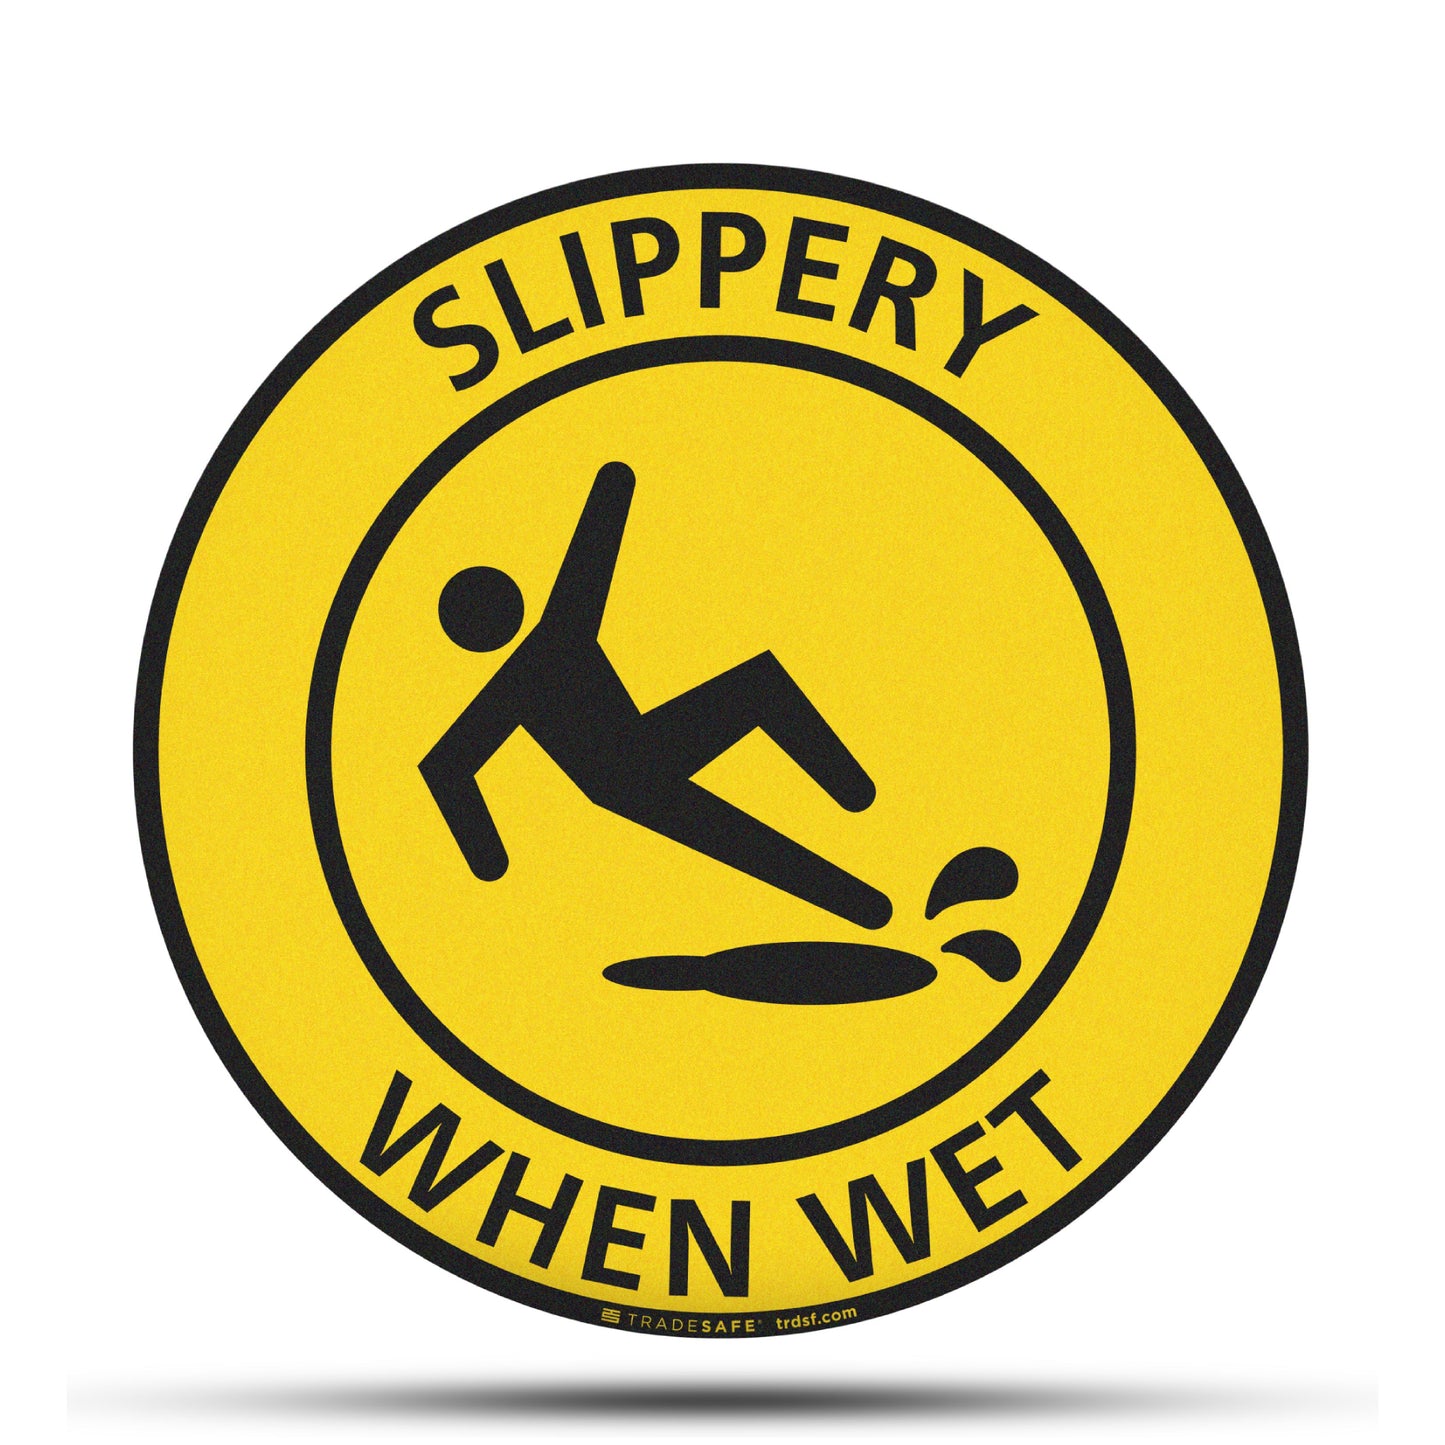 "slippery when wet" sign vinyl sticker